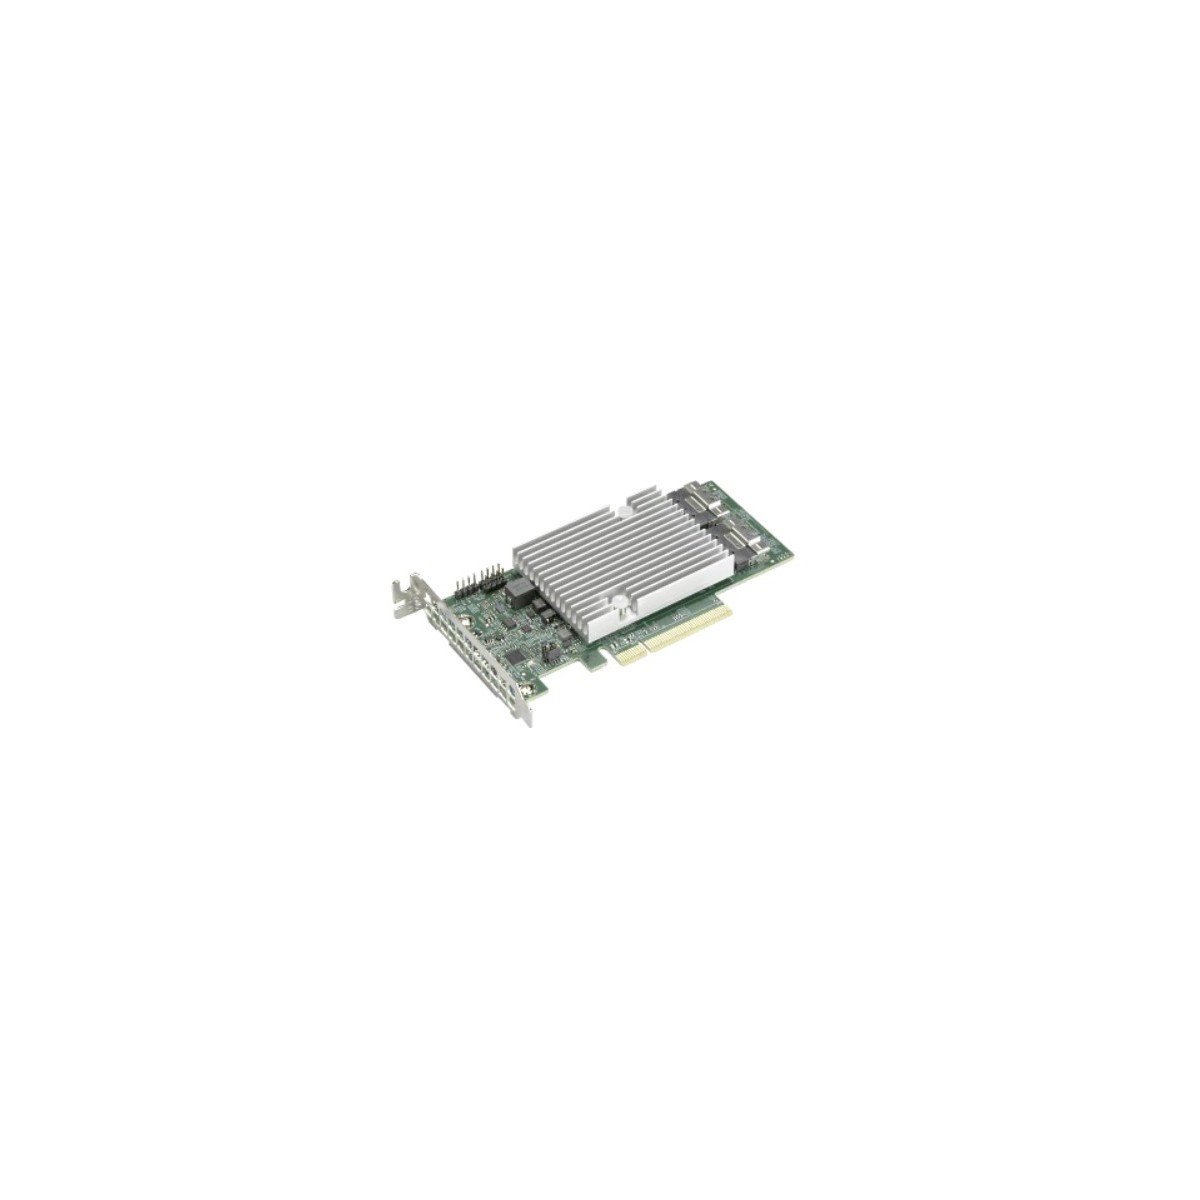 Supermicro LP 16-Port 12Gb&frasl s SAS HBA AOC-S3816L-L16iT-O - Interface Card - PCI-Express